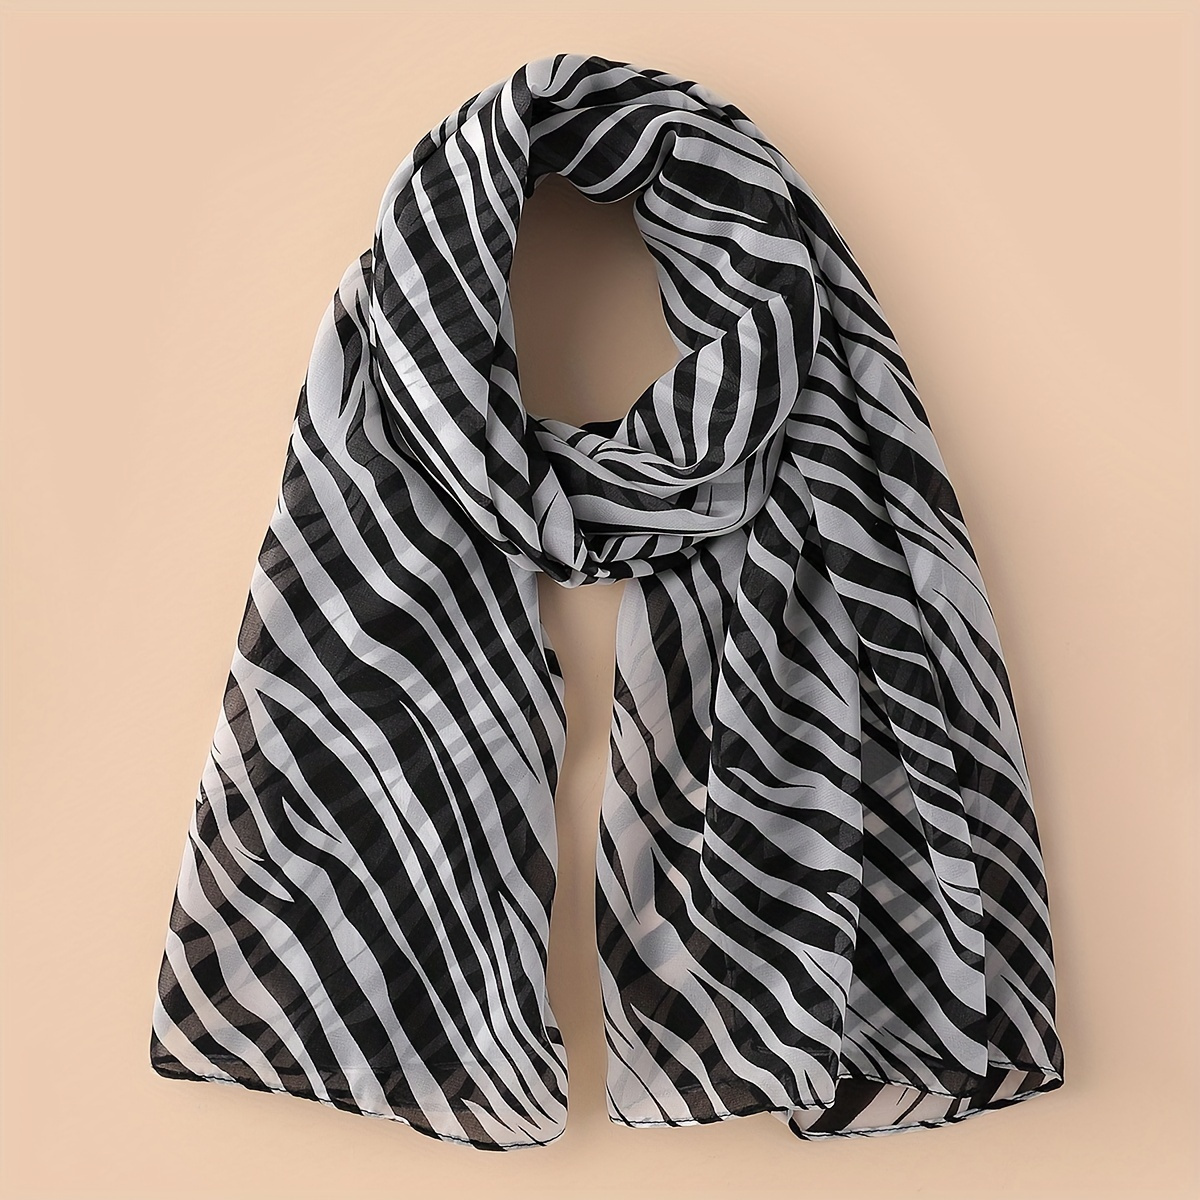 

Zebra Print Chiffon Scarf Classic Black & White Long Shawl Spring Summer Sunscreen Thin Head Wrap Elegant Travel Beach Towel